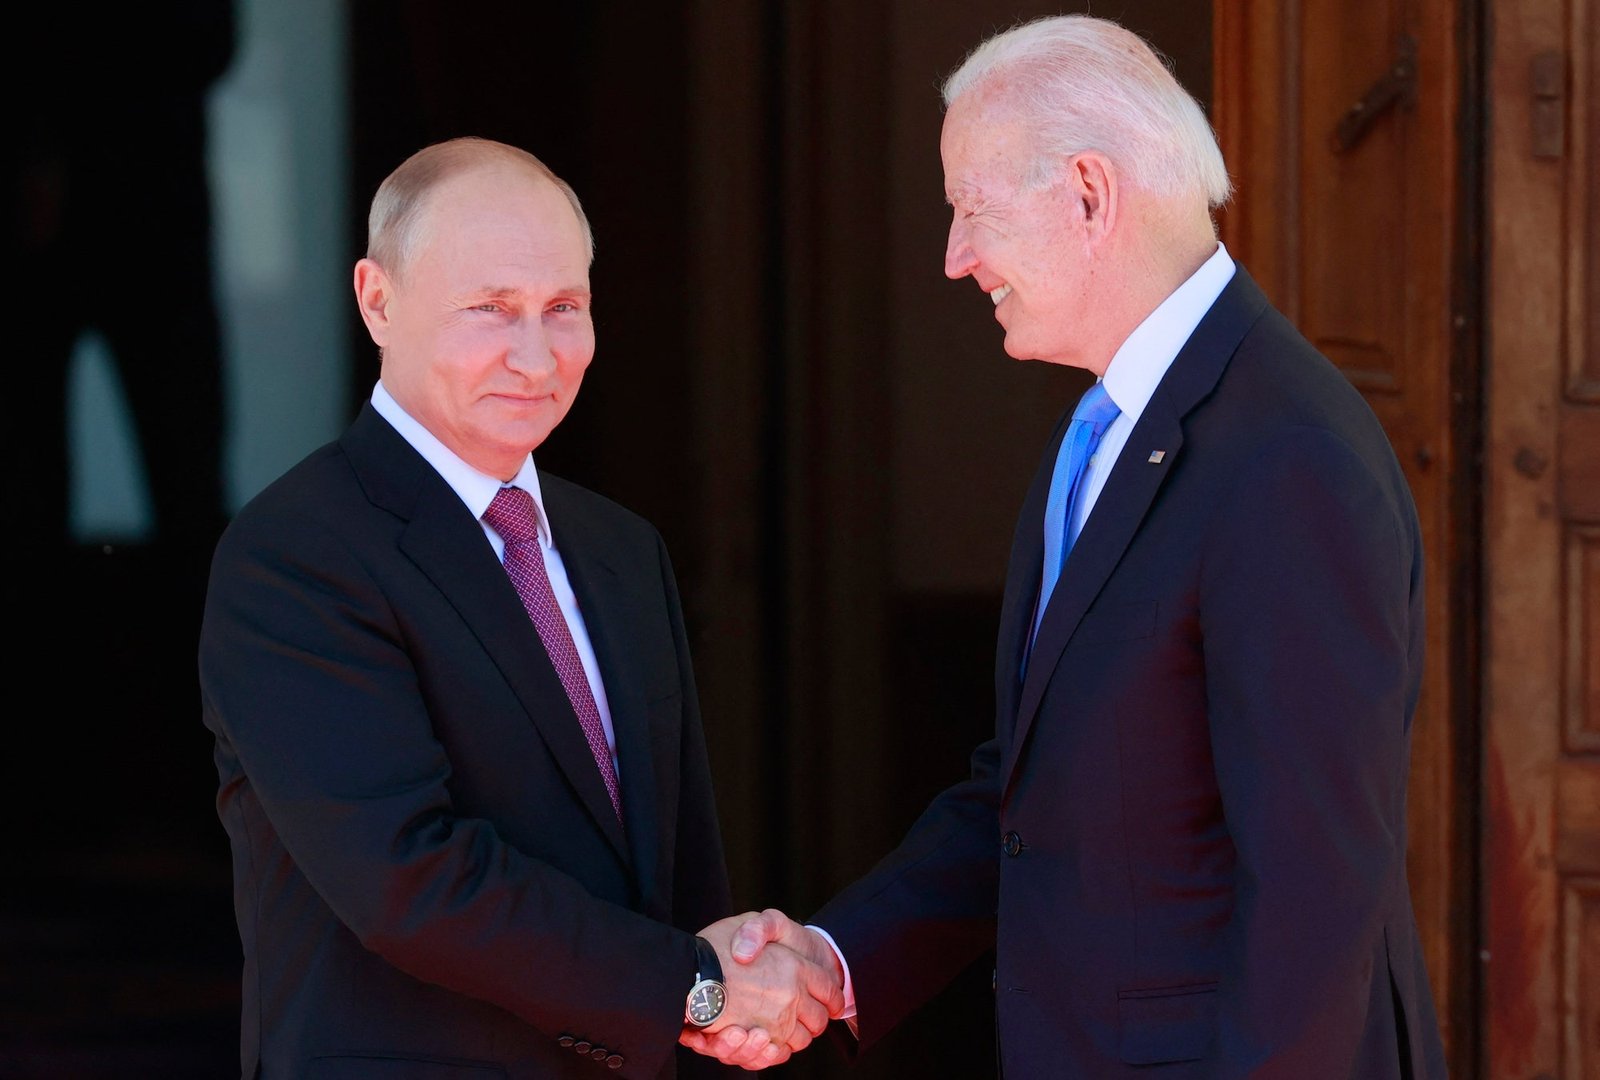 Joe Biden shakes hands with Vladimir Putin at a summit in June.